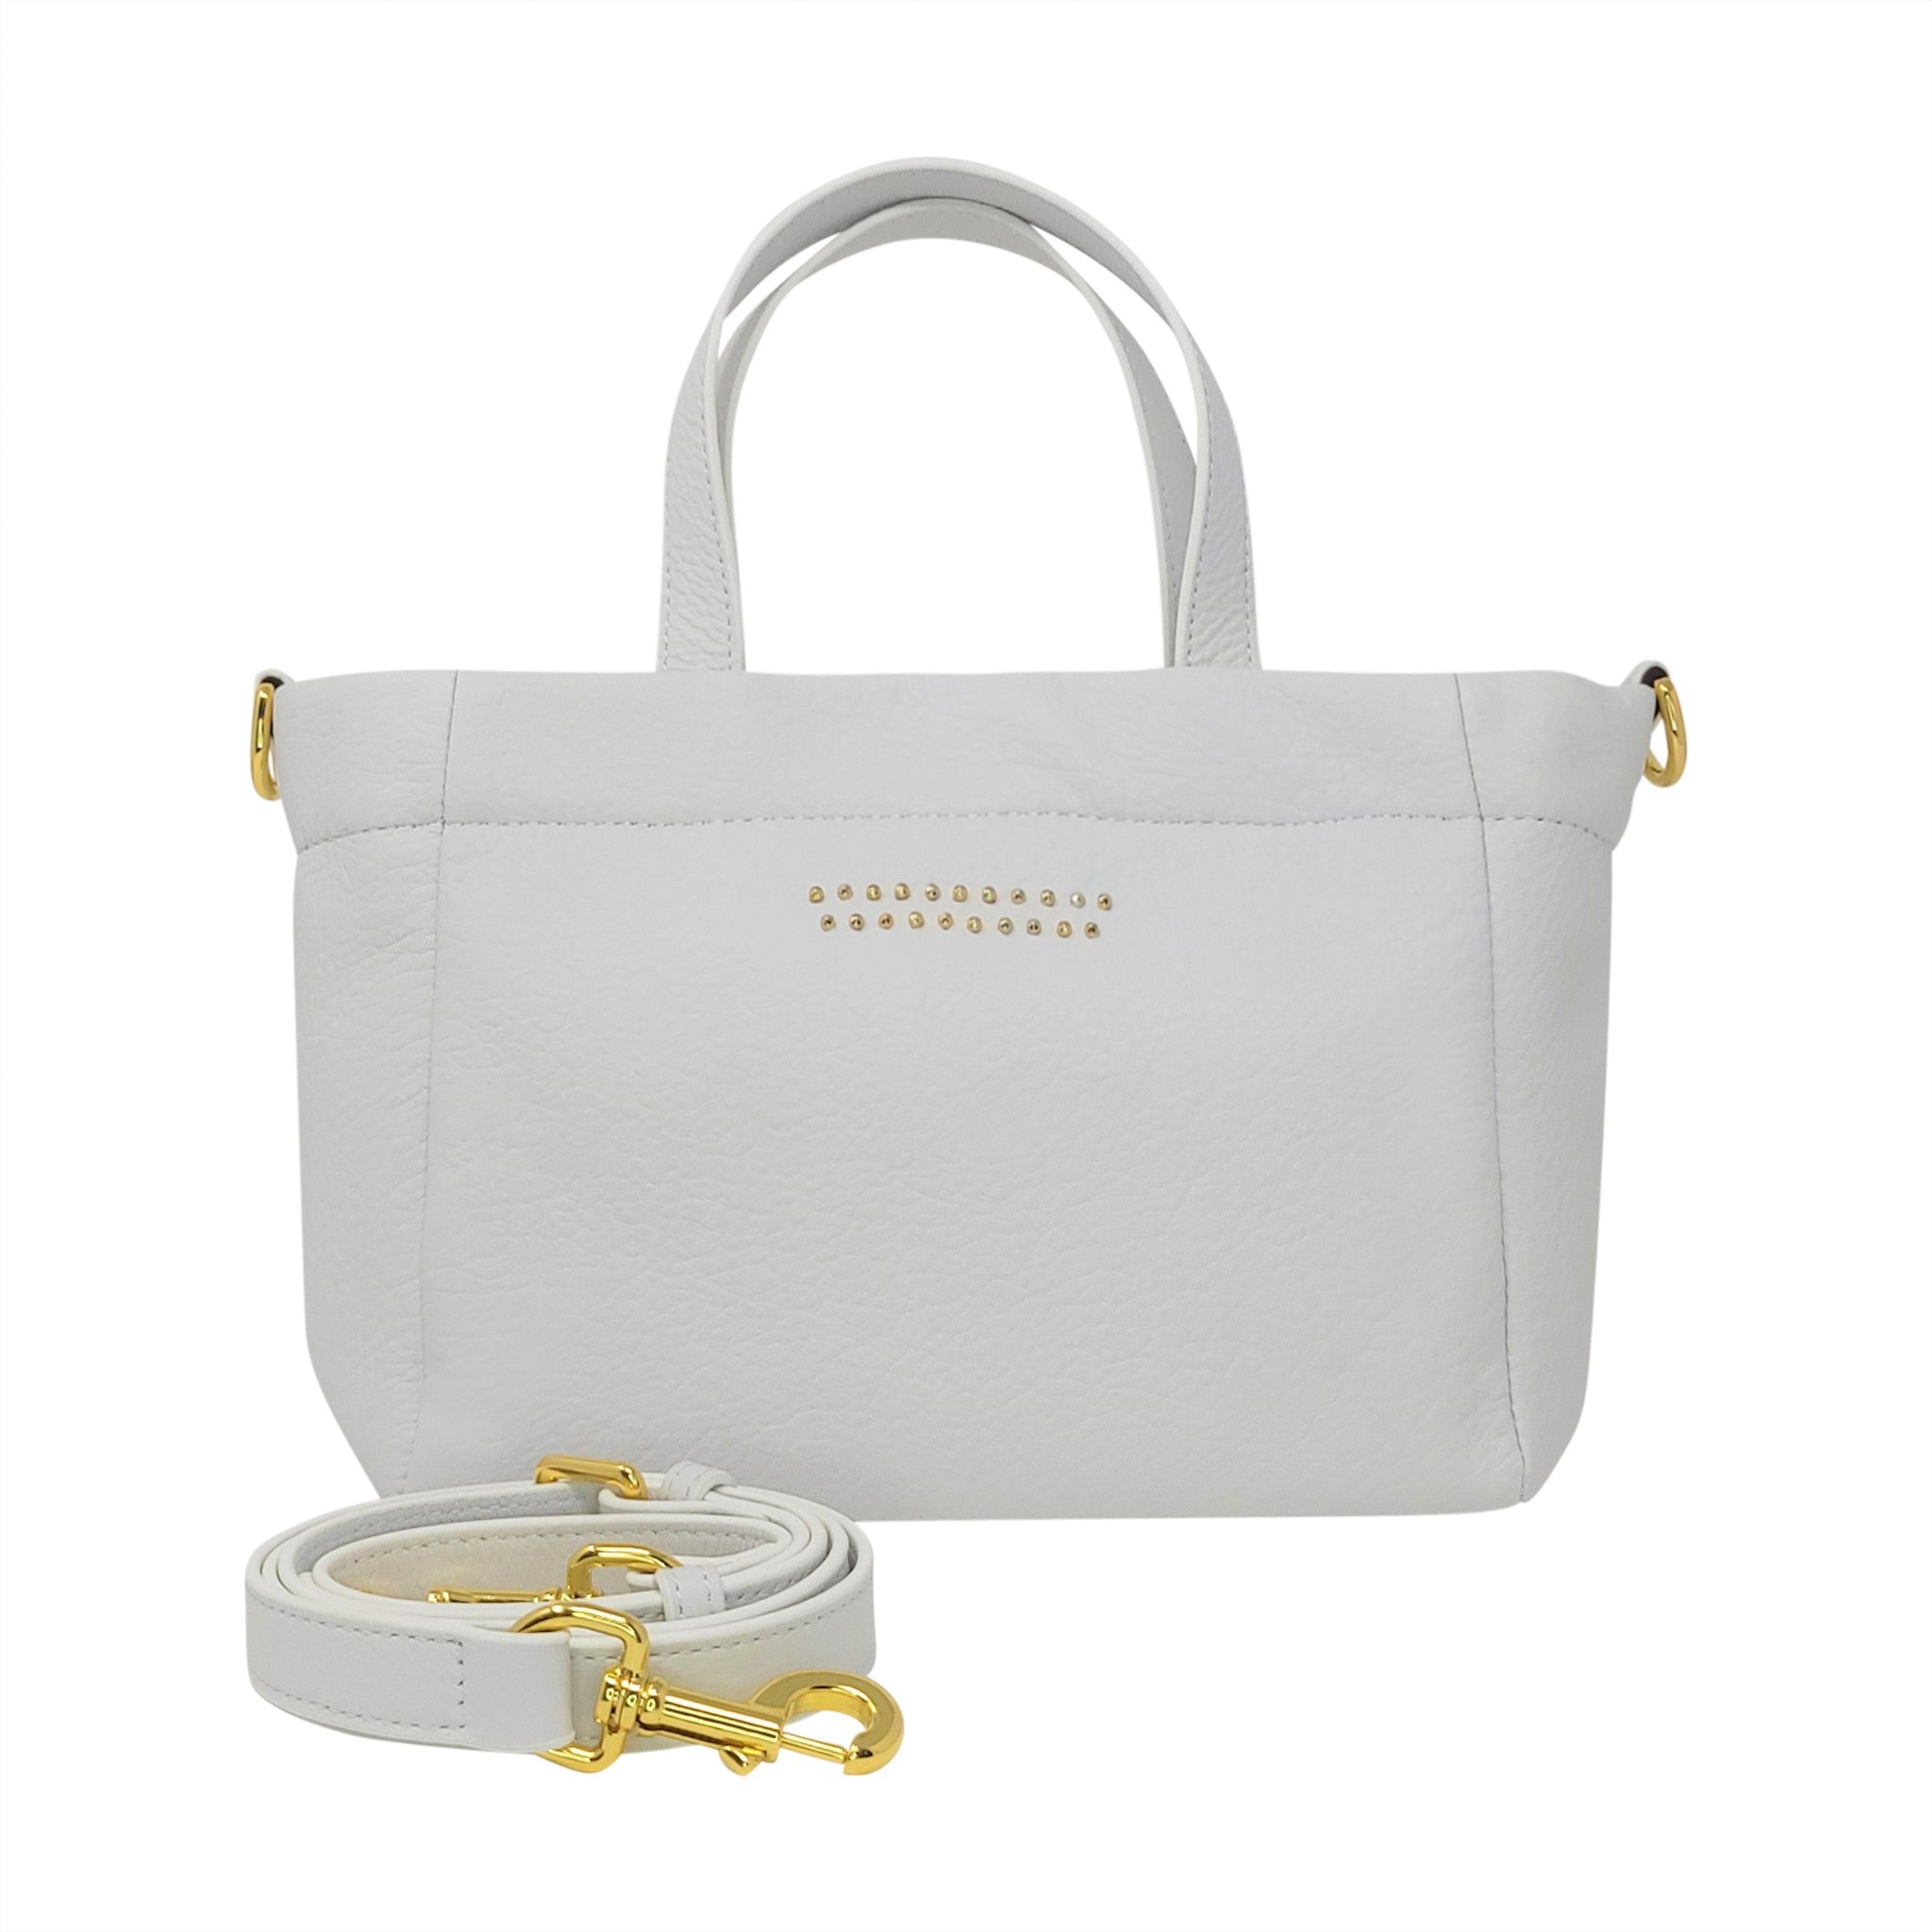 Eva leather handbag